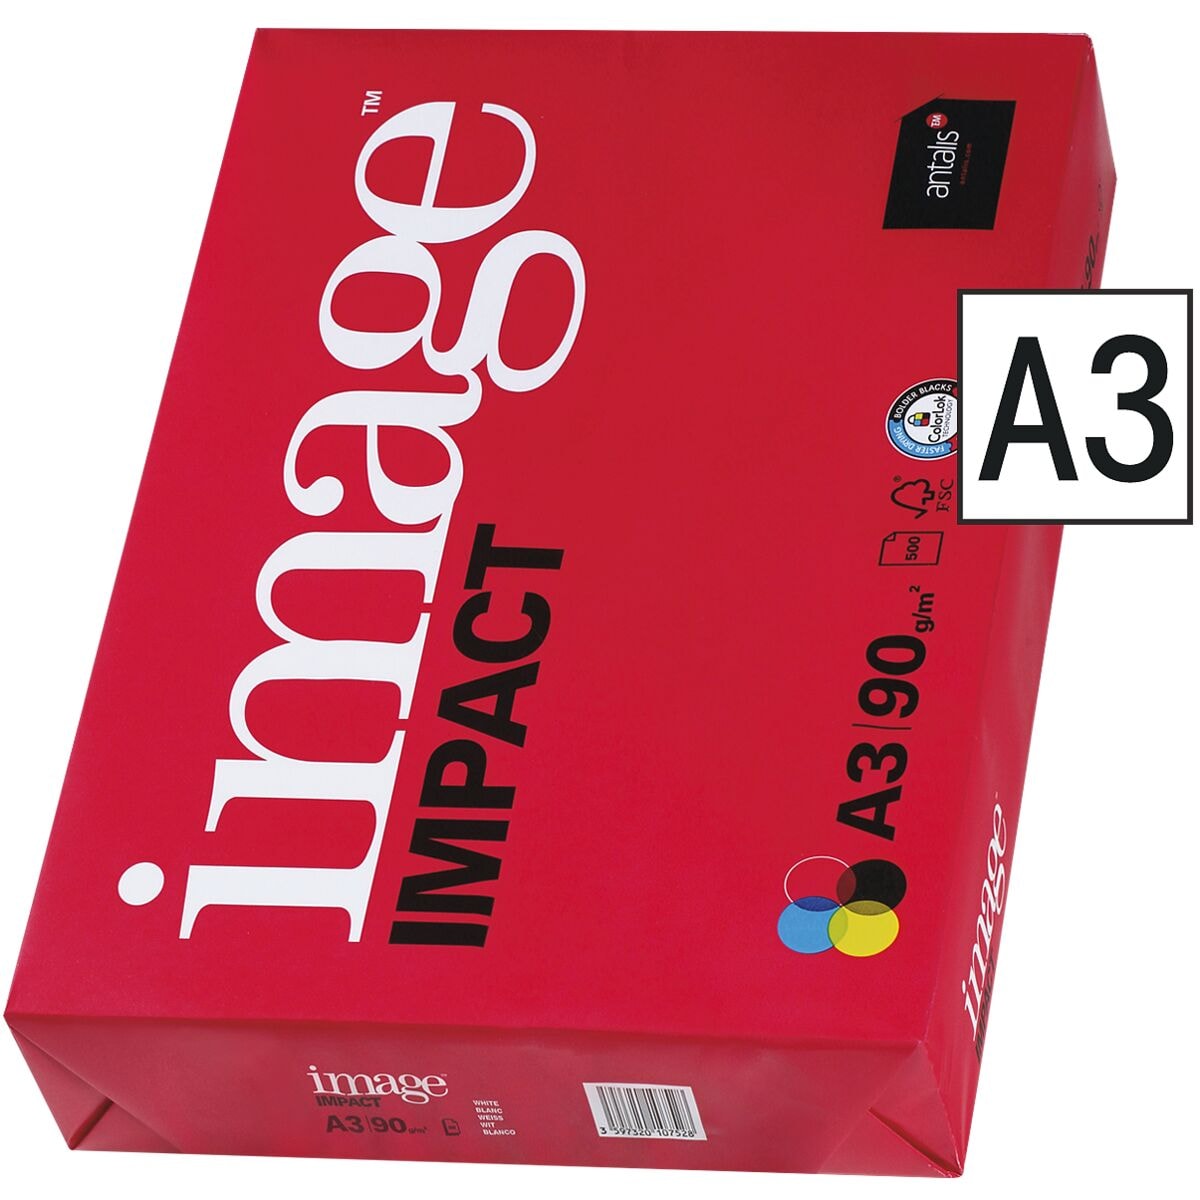 Multifunctioneel papier A3 antalis image IMPACT - 500 bladen (totaal)